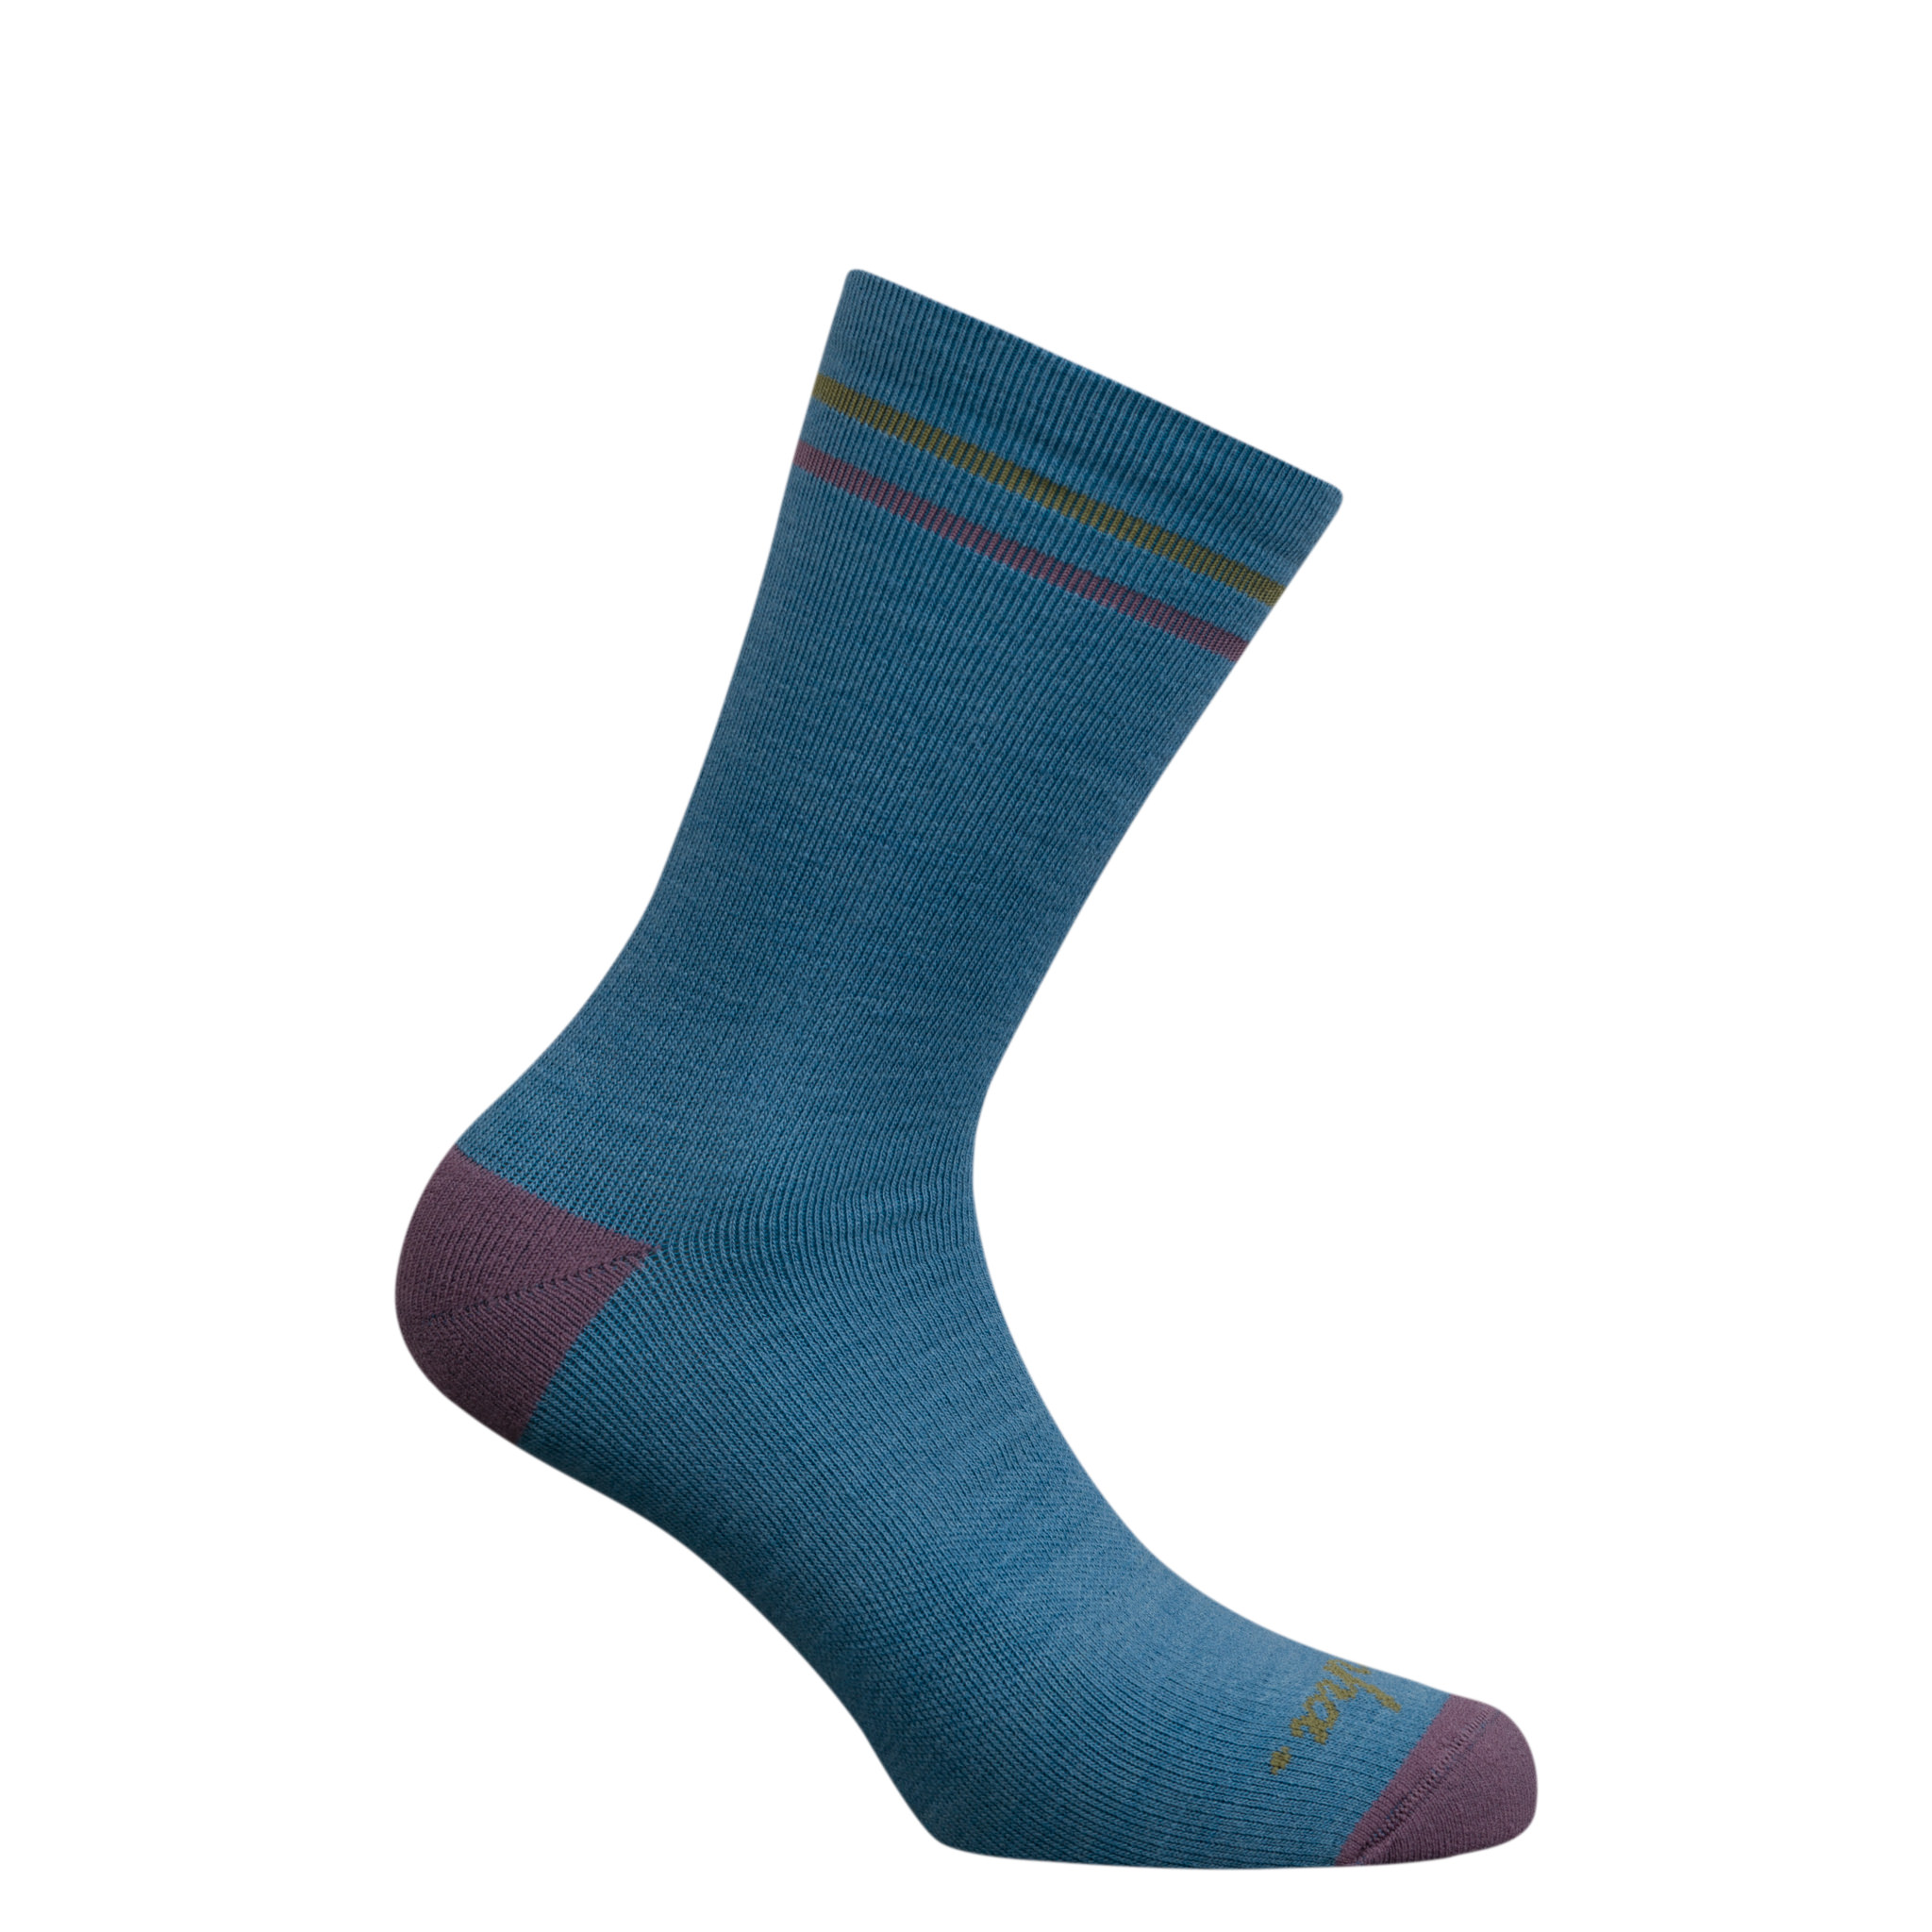 Merino Socks - Regular, Men's Cycling Socks